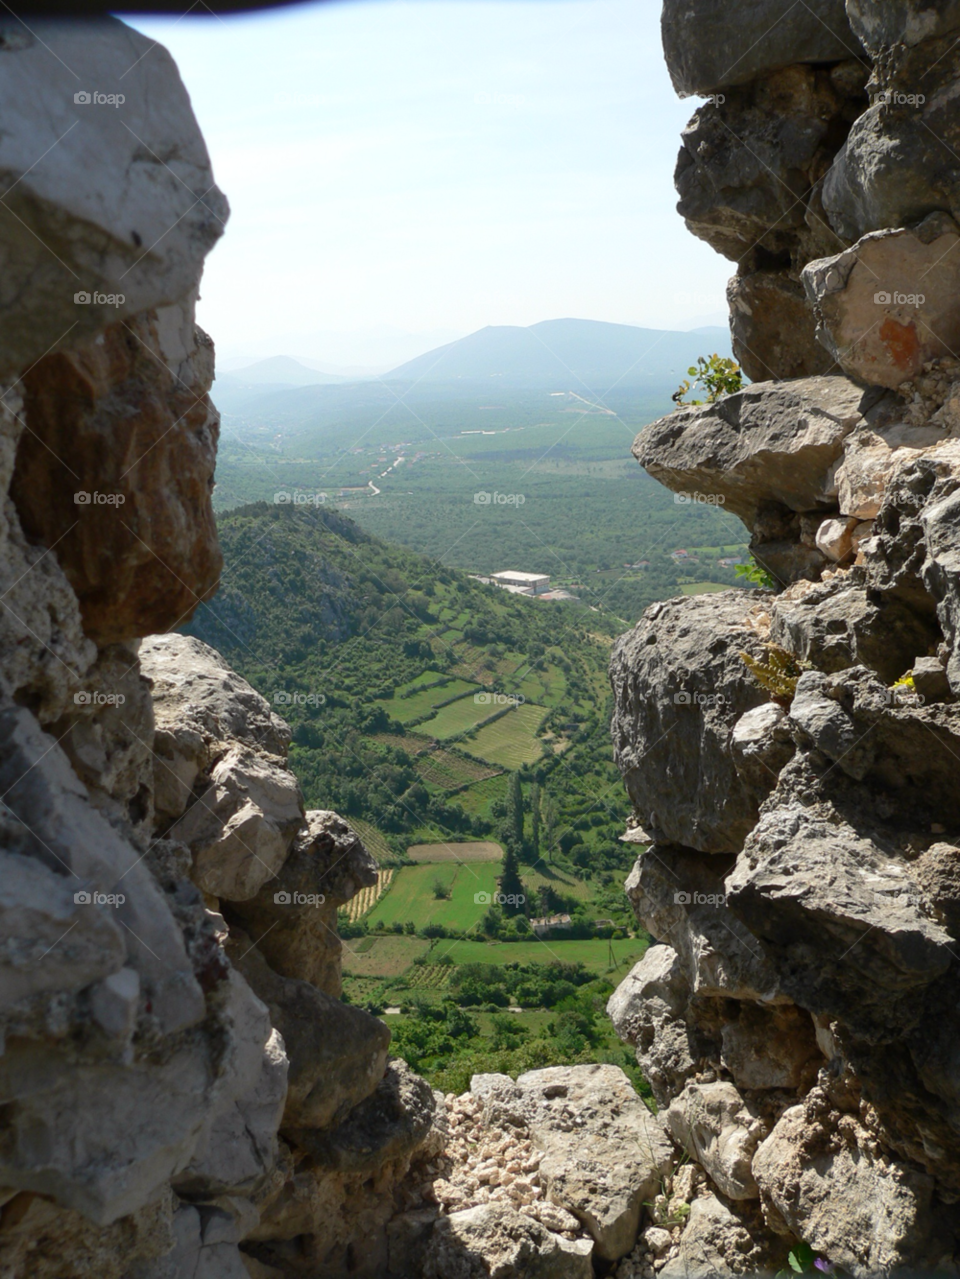 hercegovina stone mountains fields by auscro